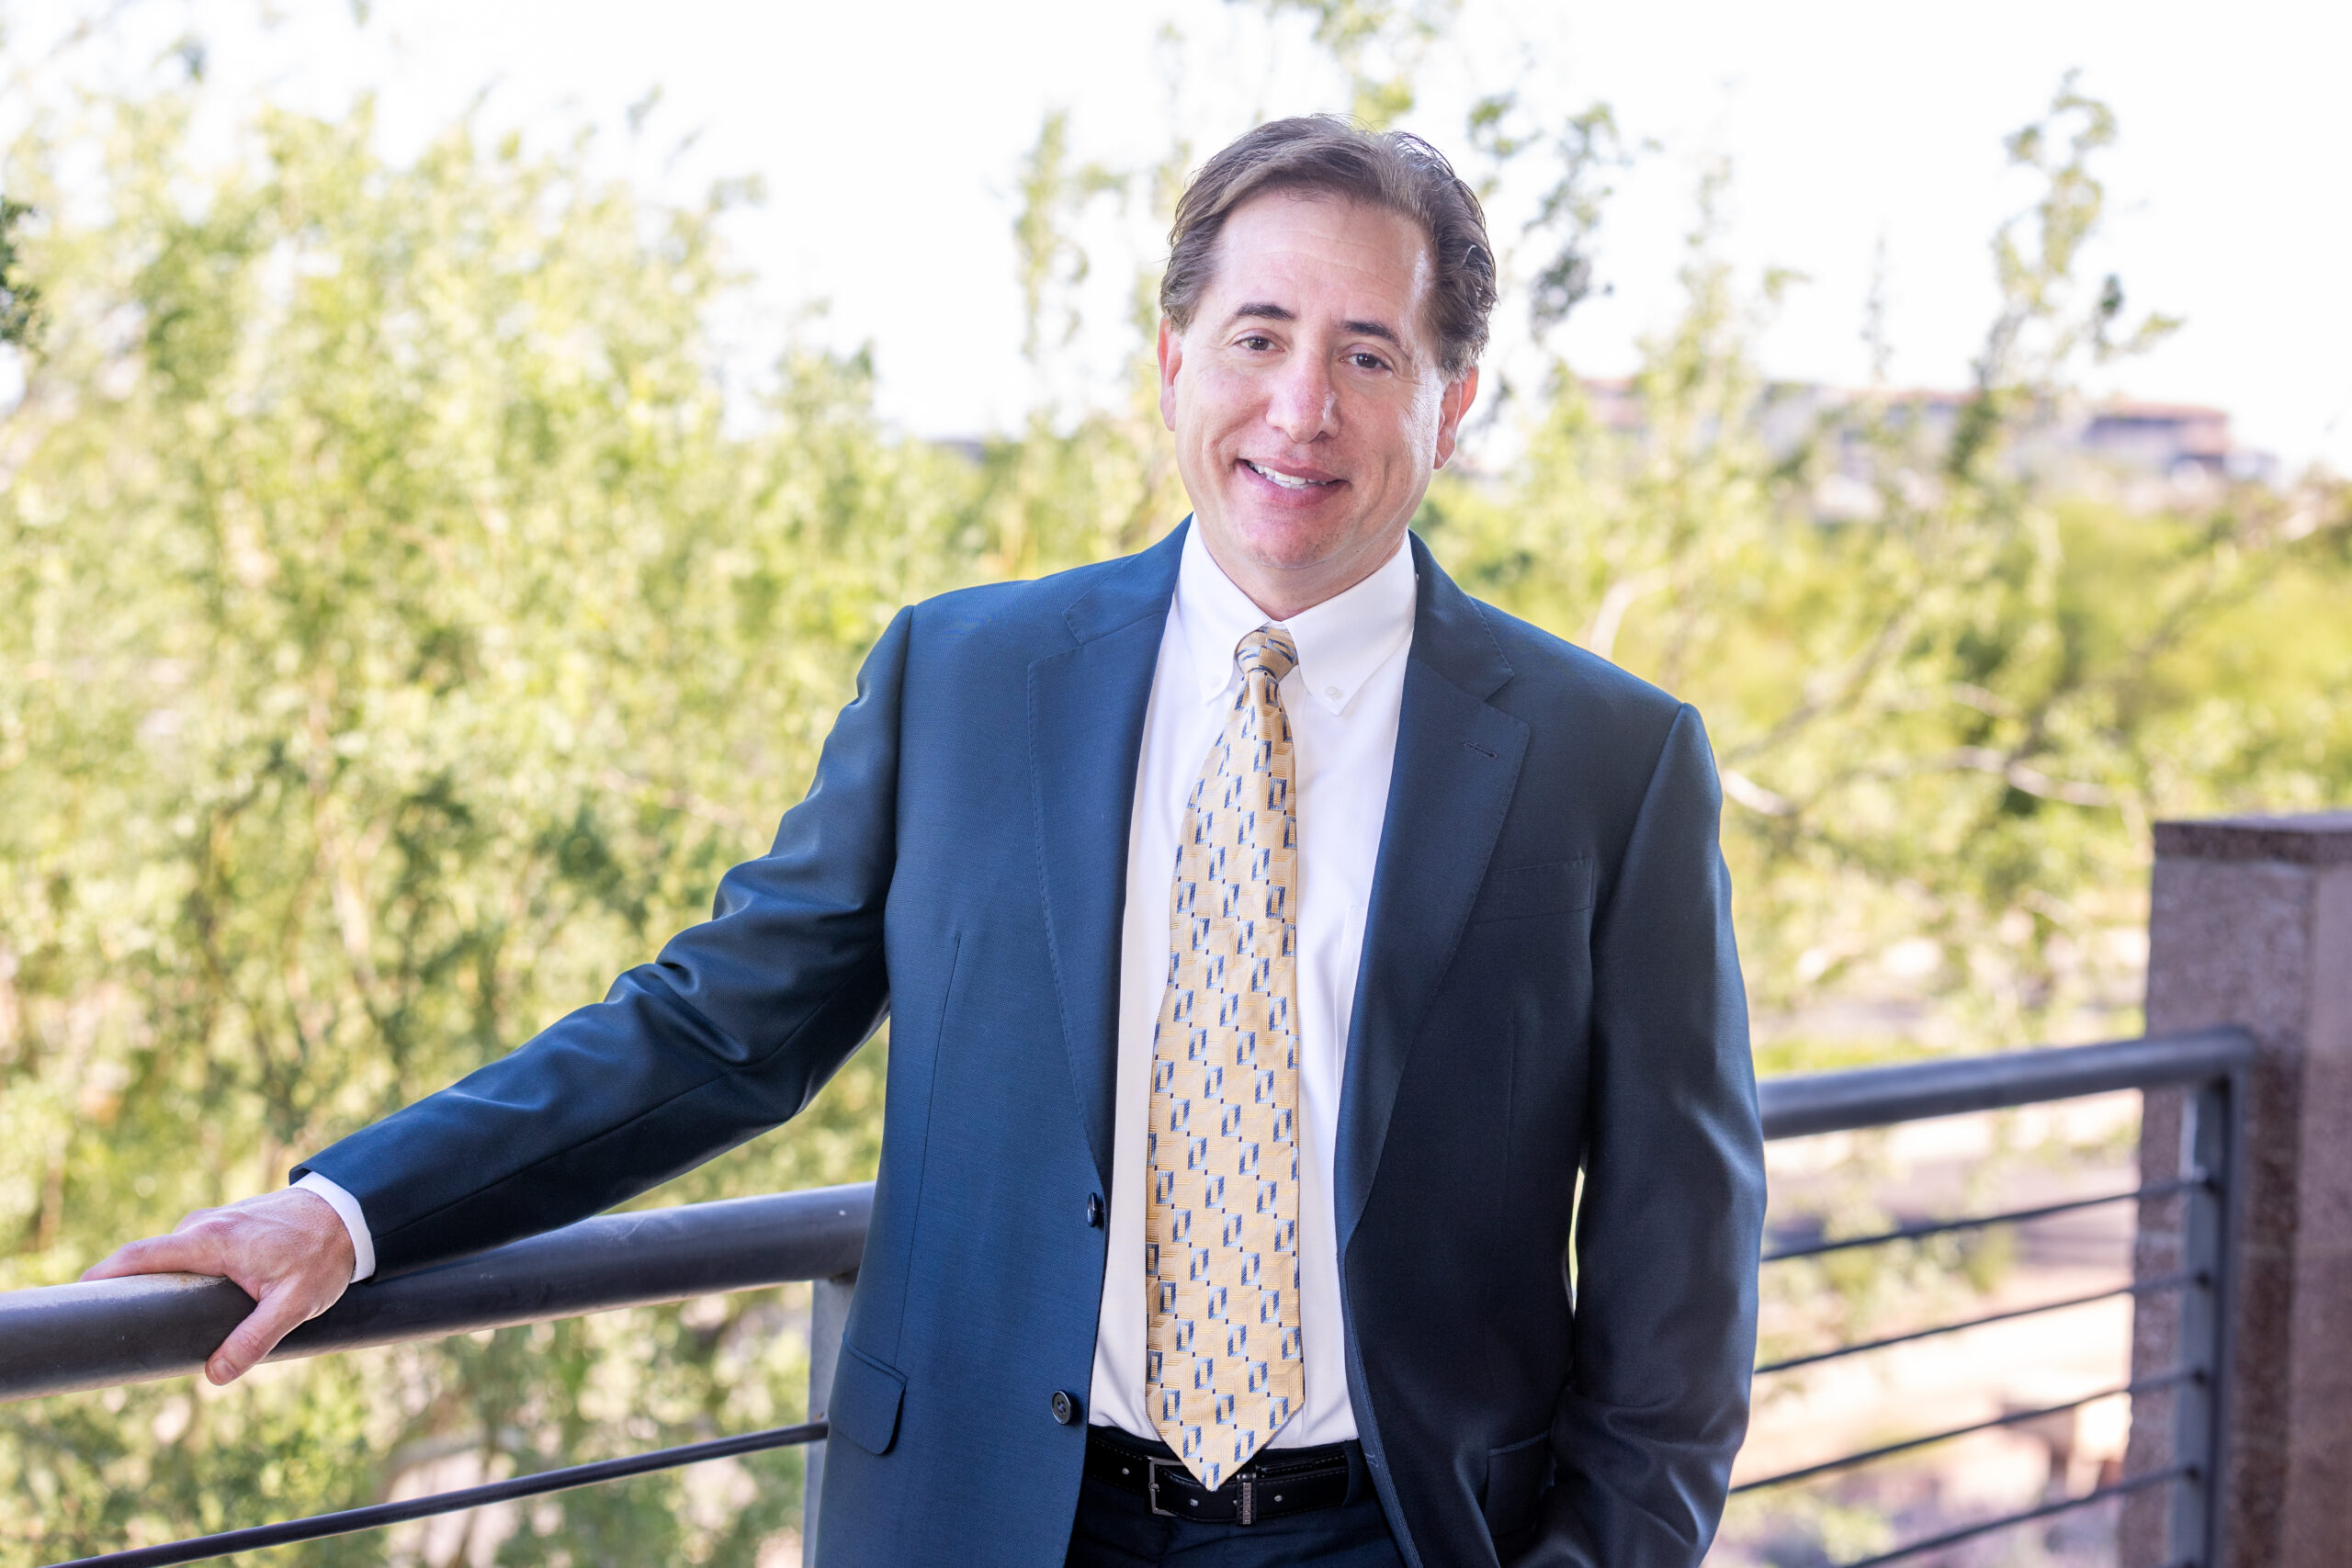 Scottsdale’s Radix Law announces hire of attorney Steven Cole